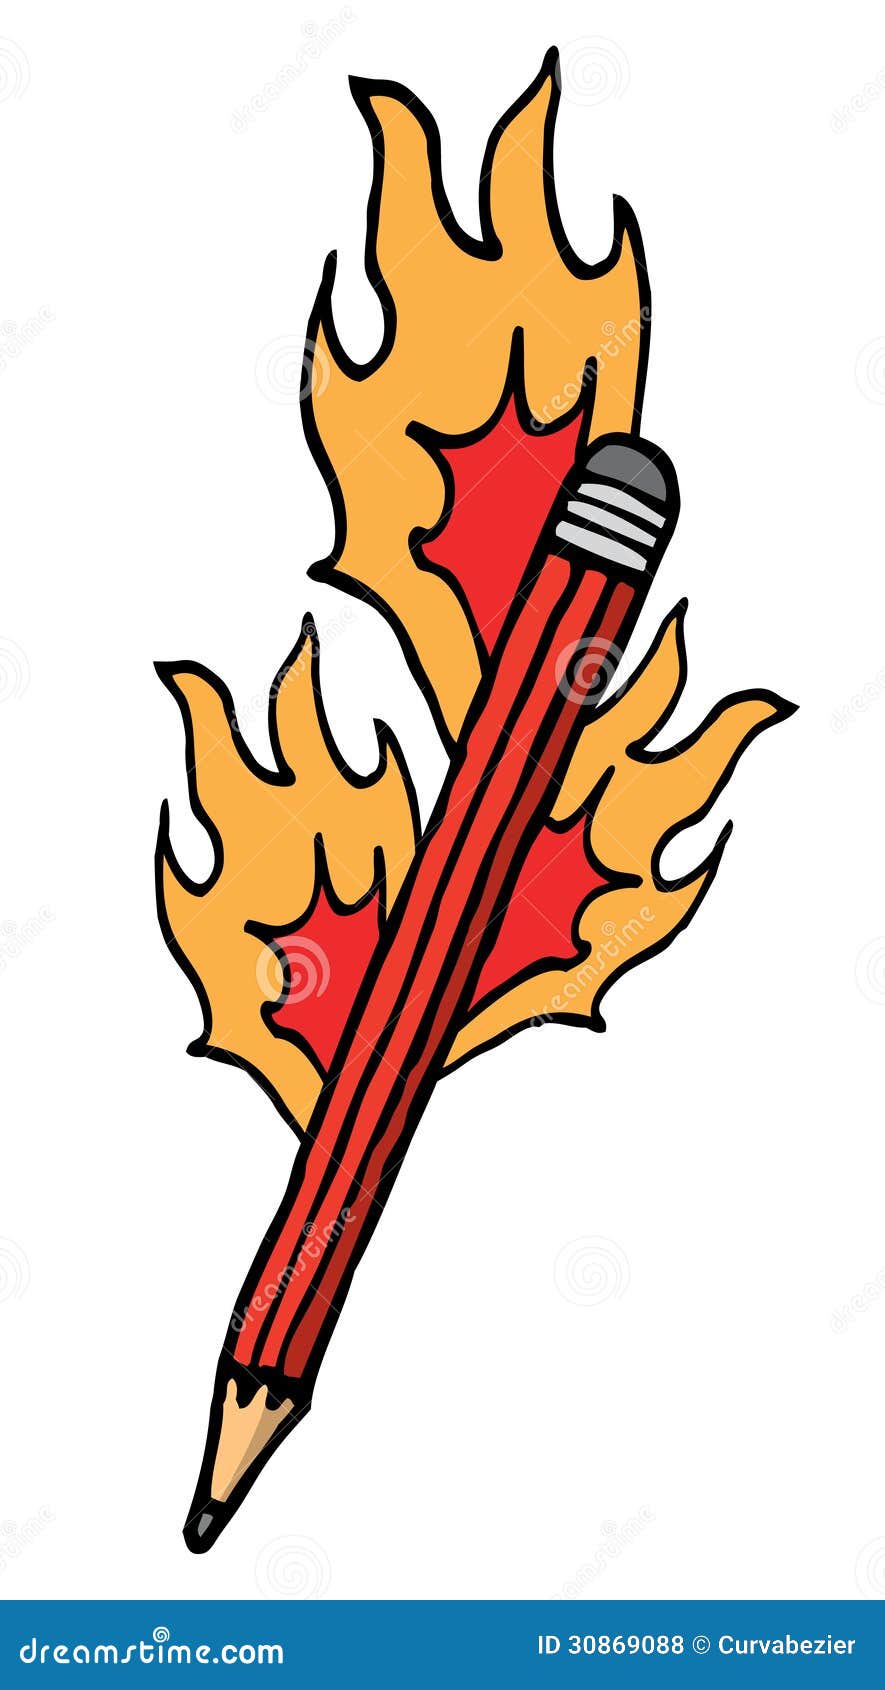 Writing on fire stock illustration. Illustration of fire 30869088